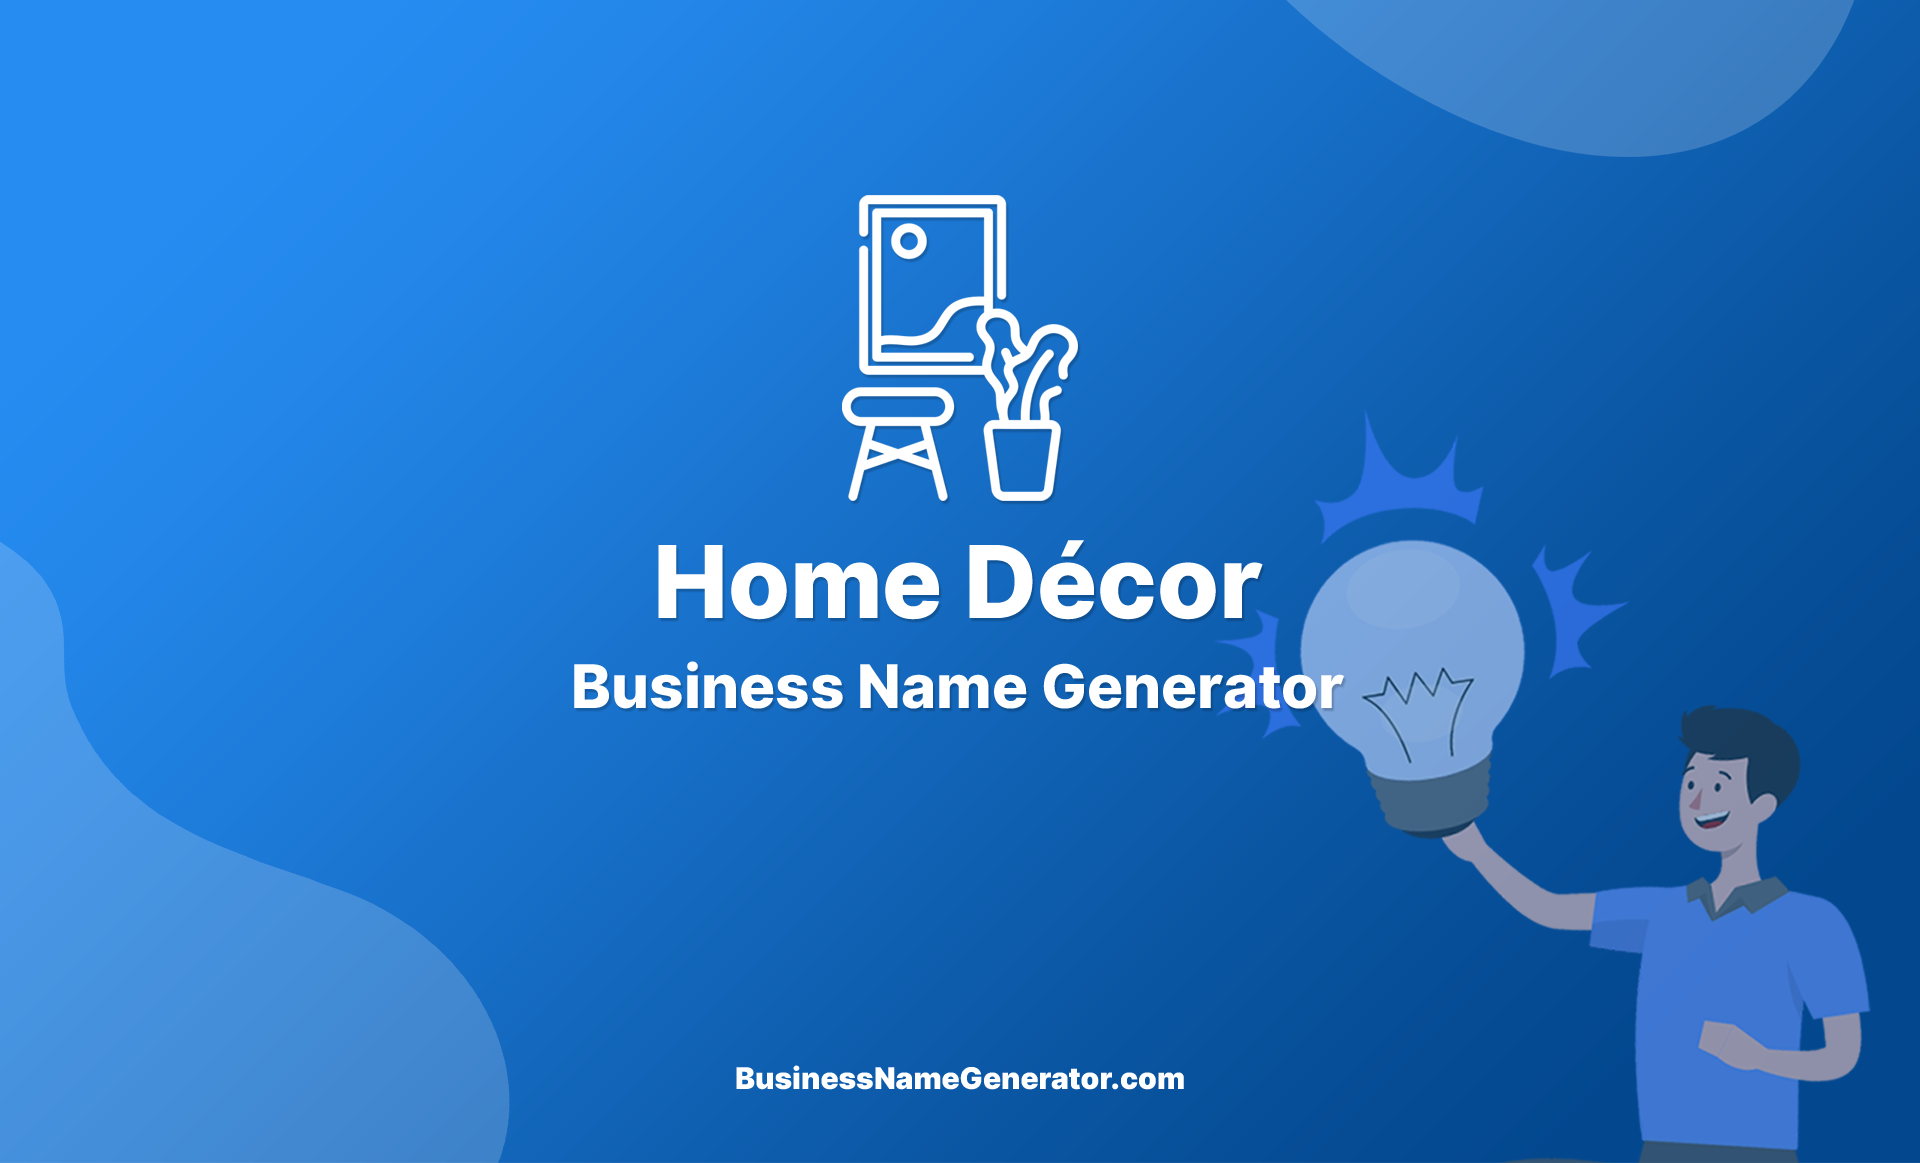 Home Décor Business Name Generator